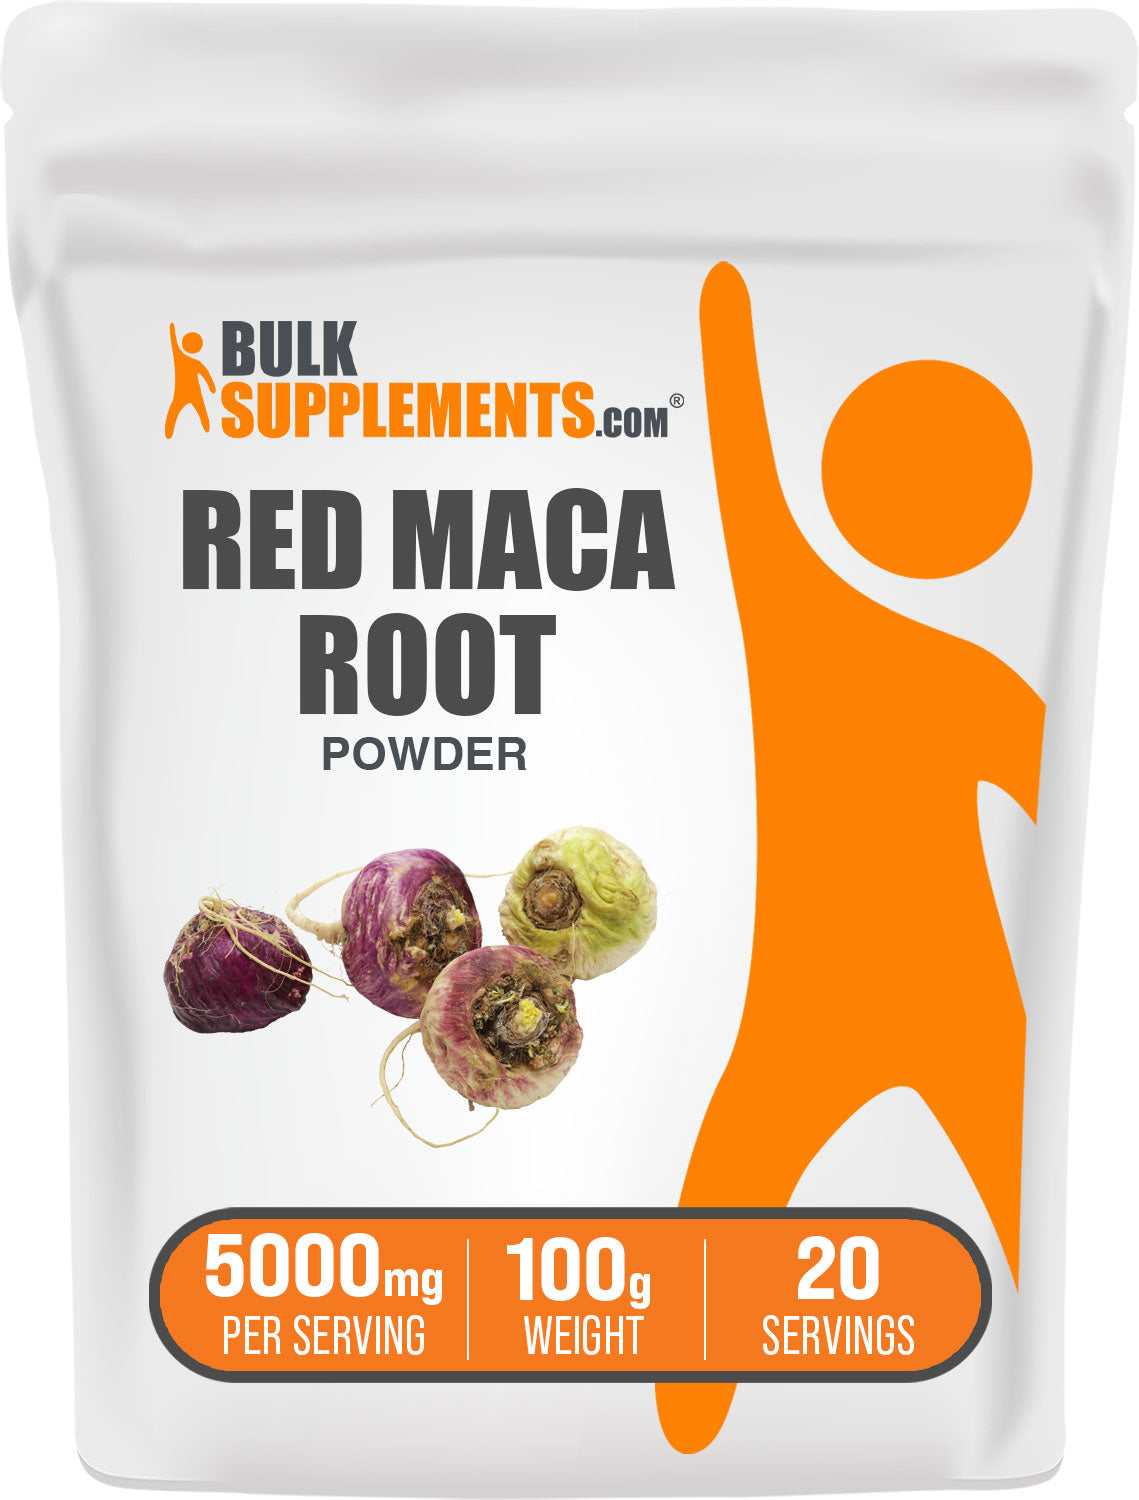 BulkSupplements.com Red Maca Powder 100g Bag